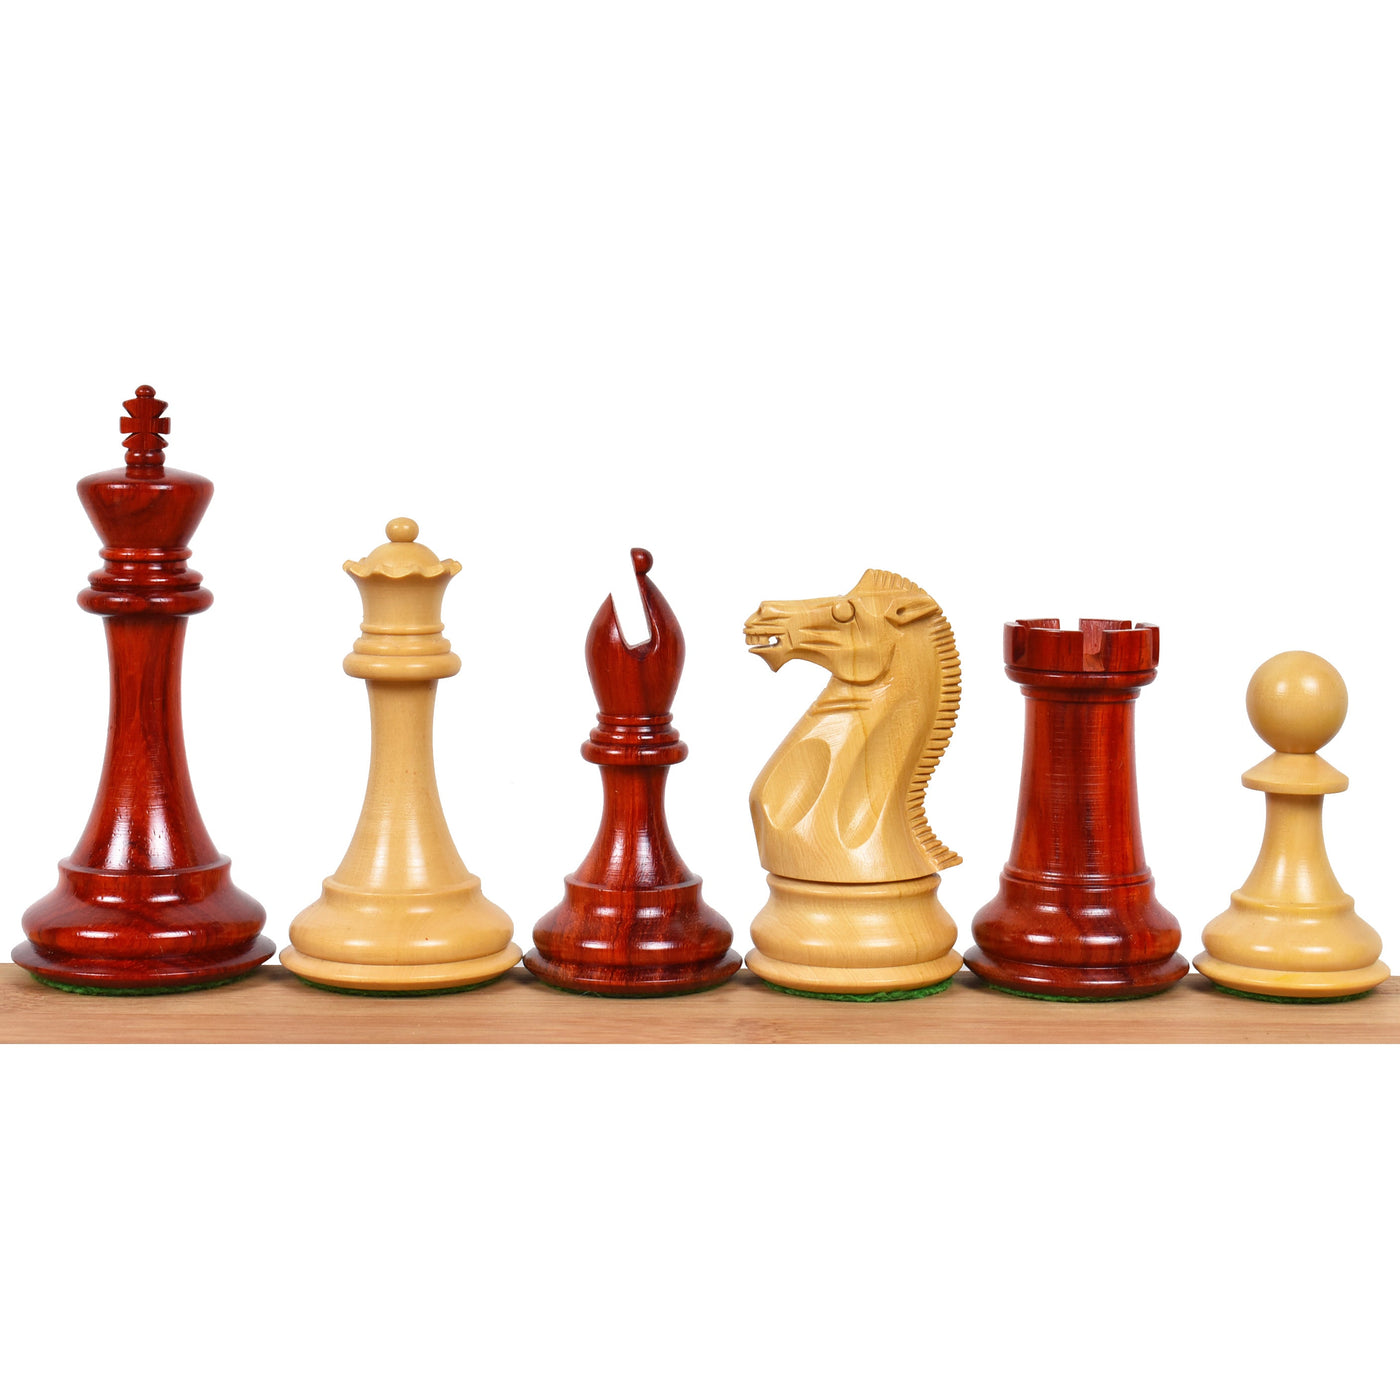 4" Sleek Staunton Luxury Chess Bud Rose Wood Pieces with 17.7" Borderless Bud Rosewood & Maple Wood Chess board and Golden Rosewood Chess Pieces Storage Box